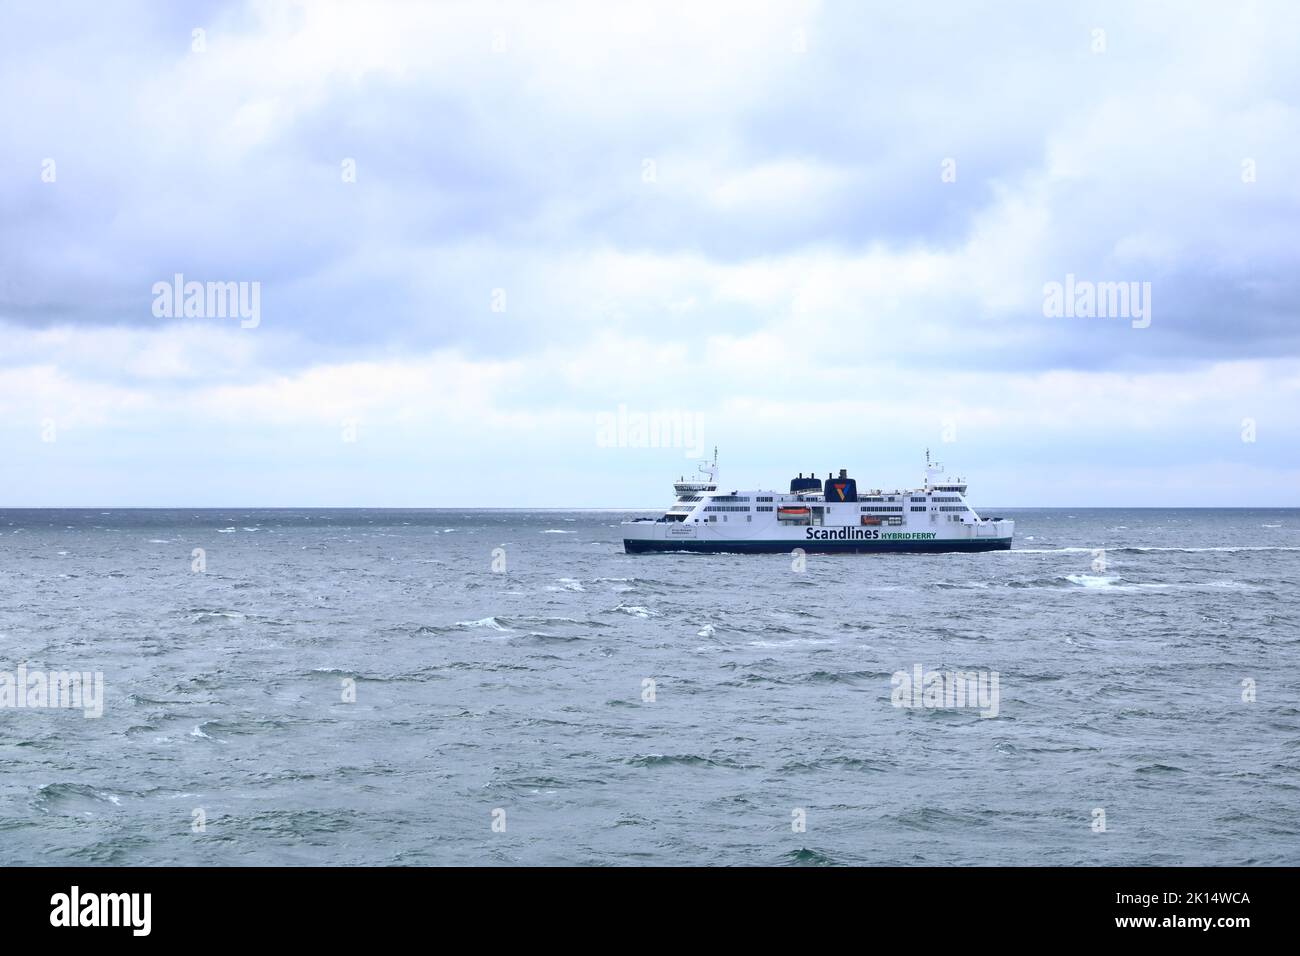 June 2 2022 - Puttgarden, Germany: the Scandlines passenger ferry between the ports of Rødbyhavn and Puttgarden Stock Photo